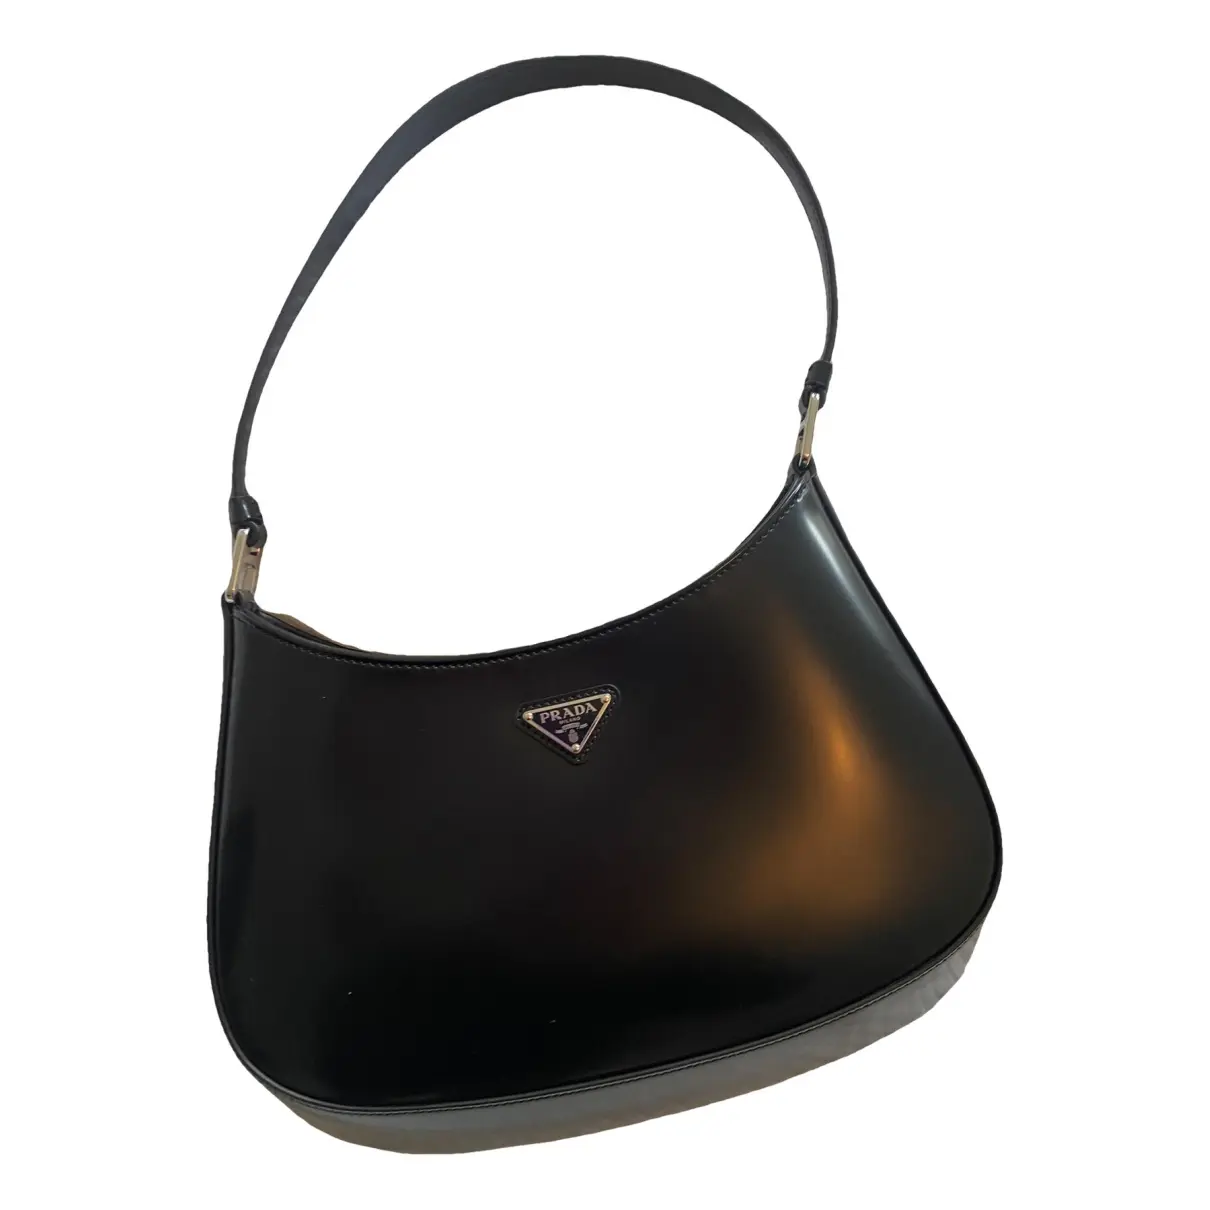 Cleo leather handbag